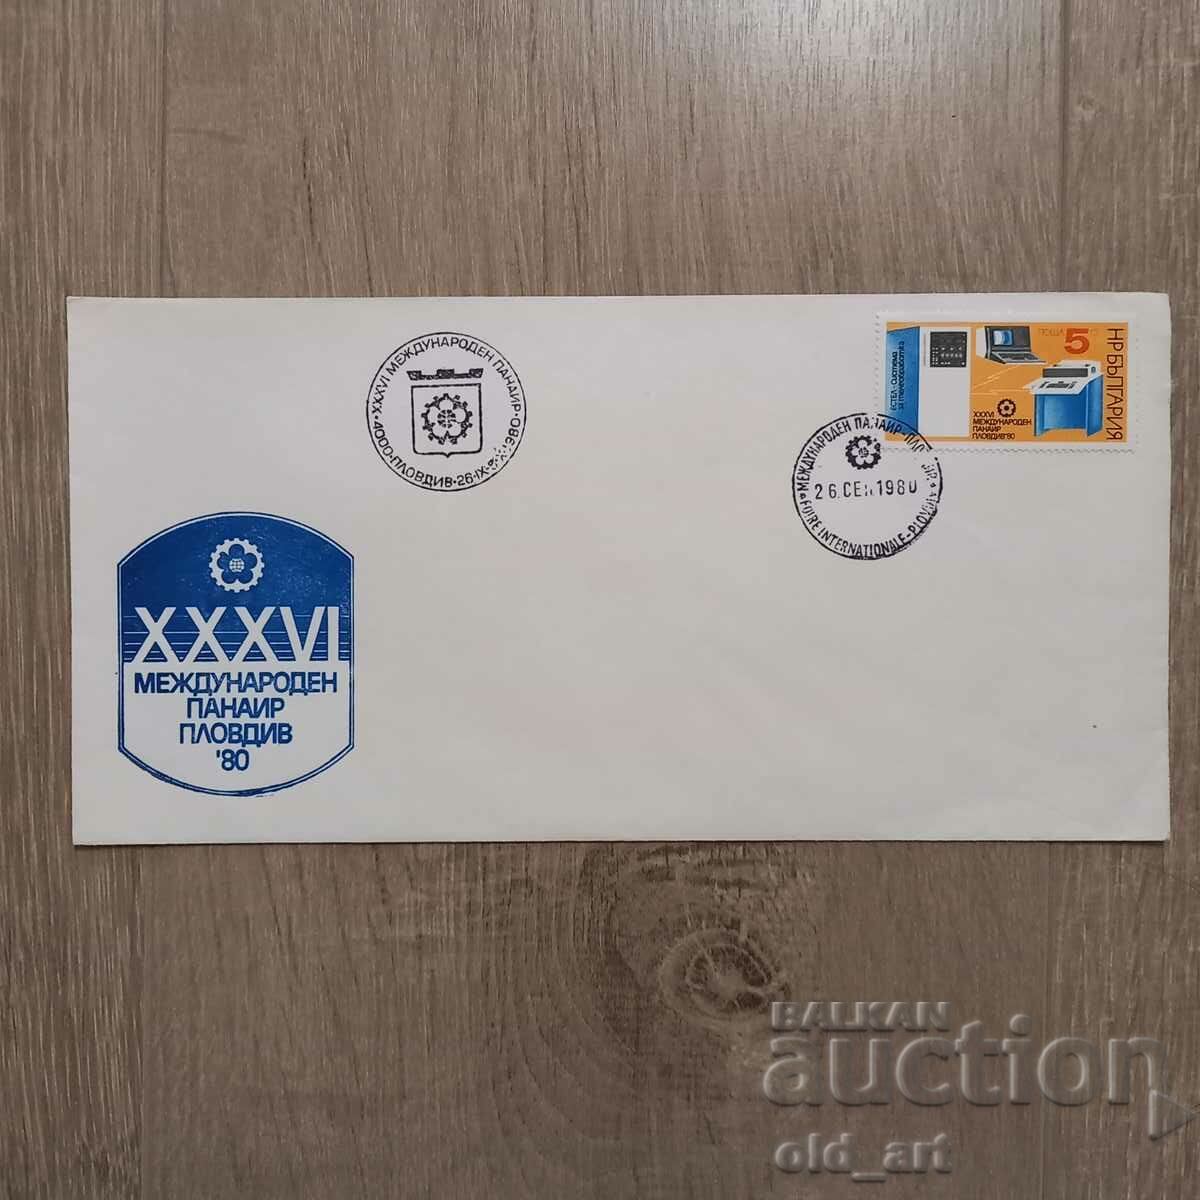 Postal envelope - XXXVI International Fair Plovdiv 80